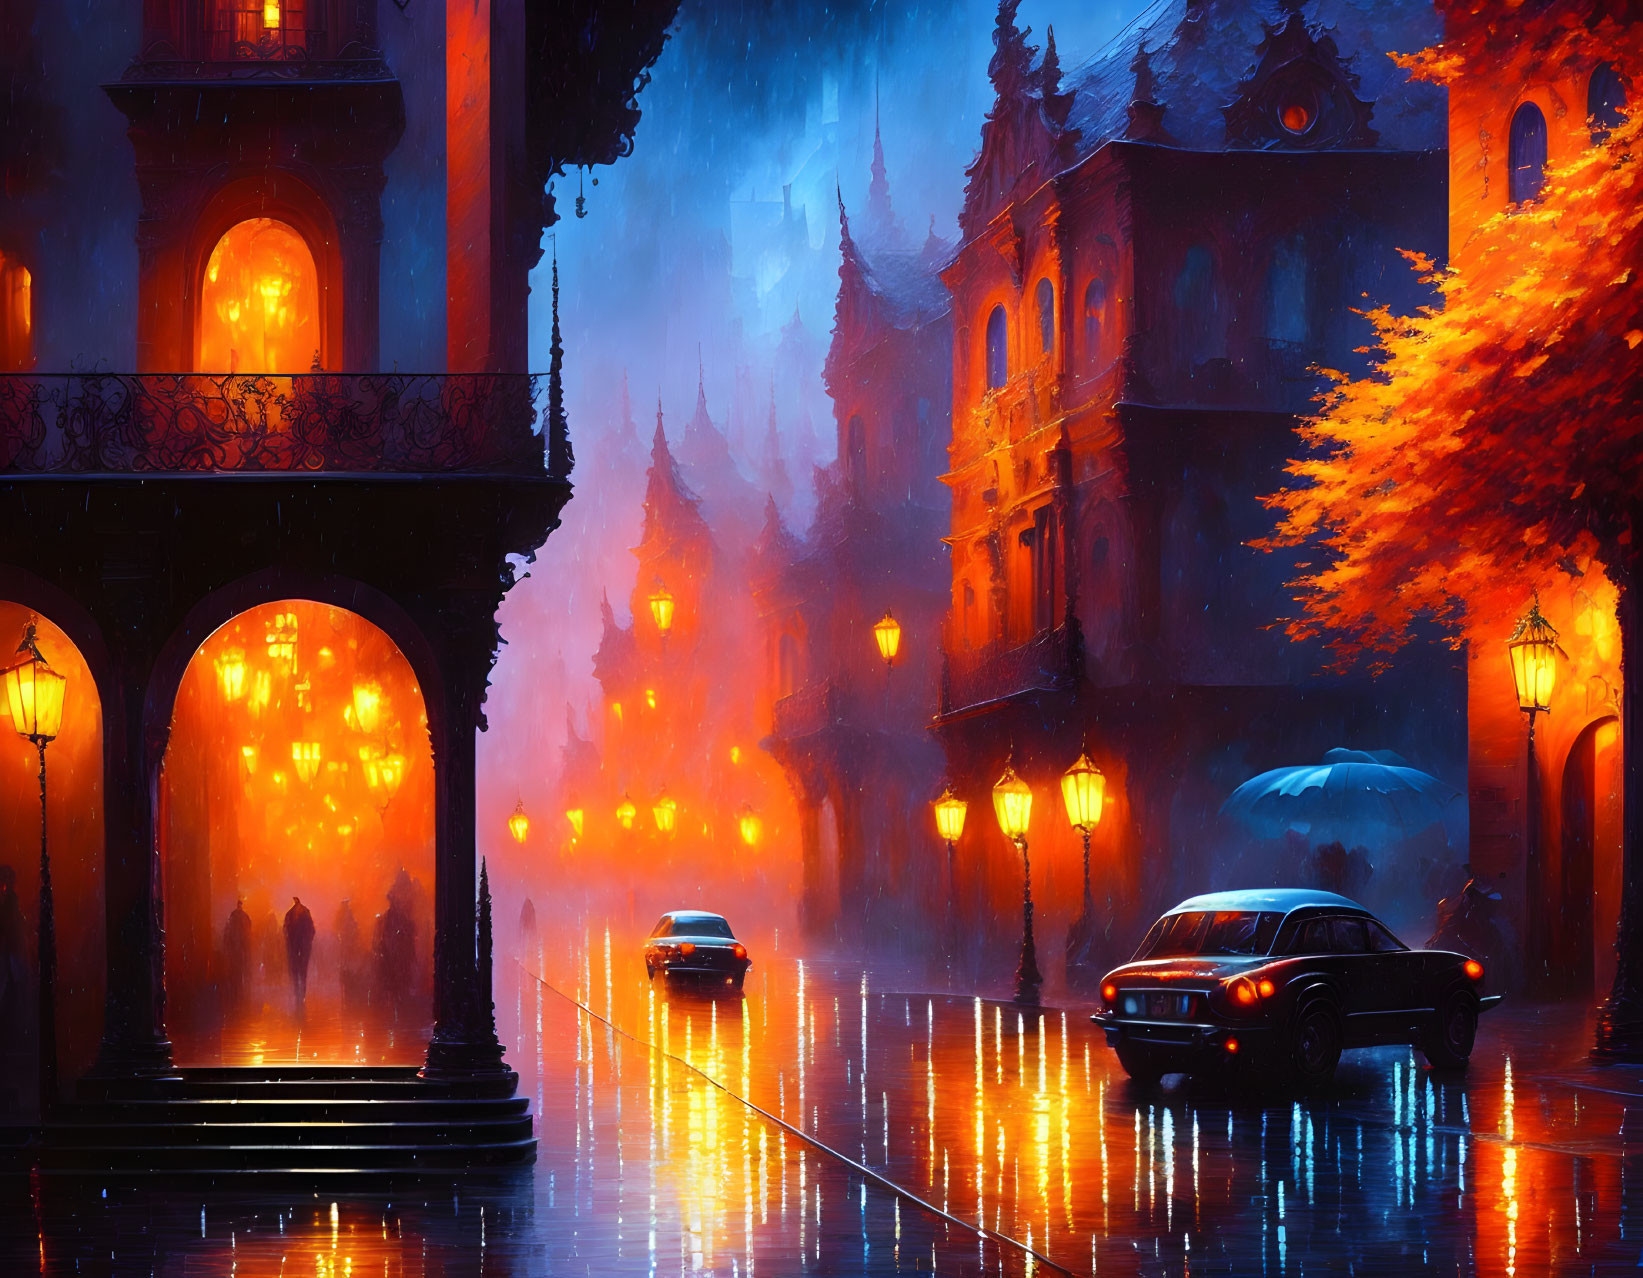 The City of Rain